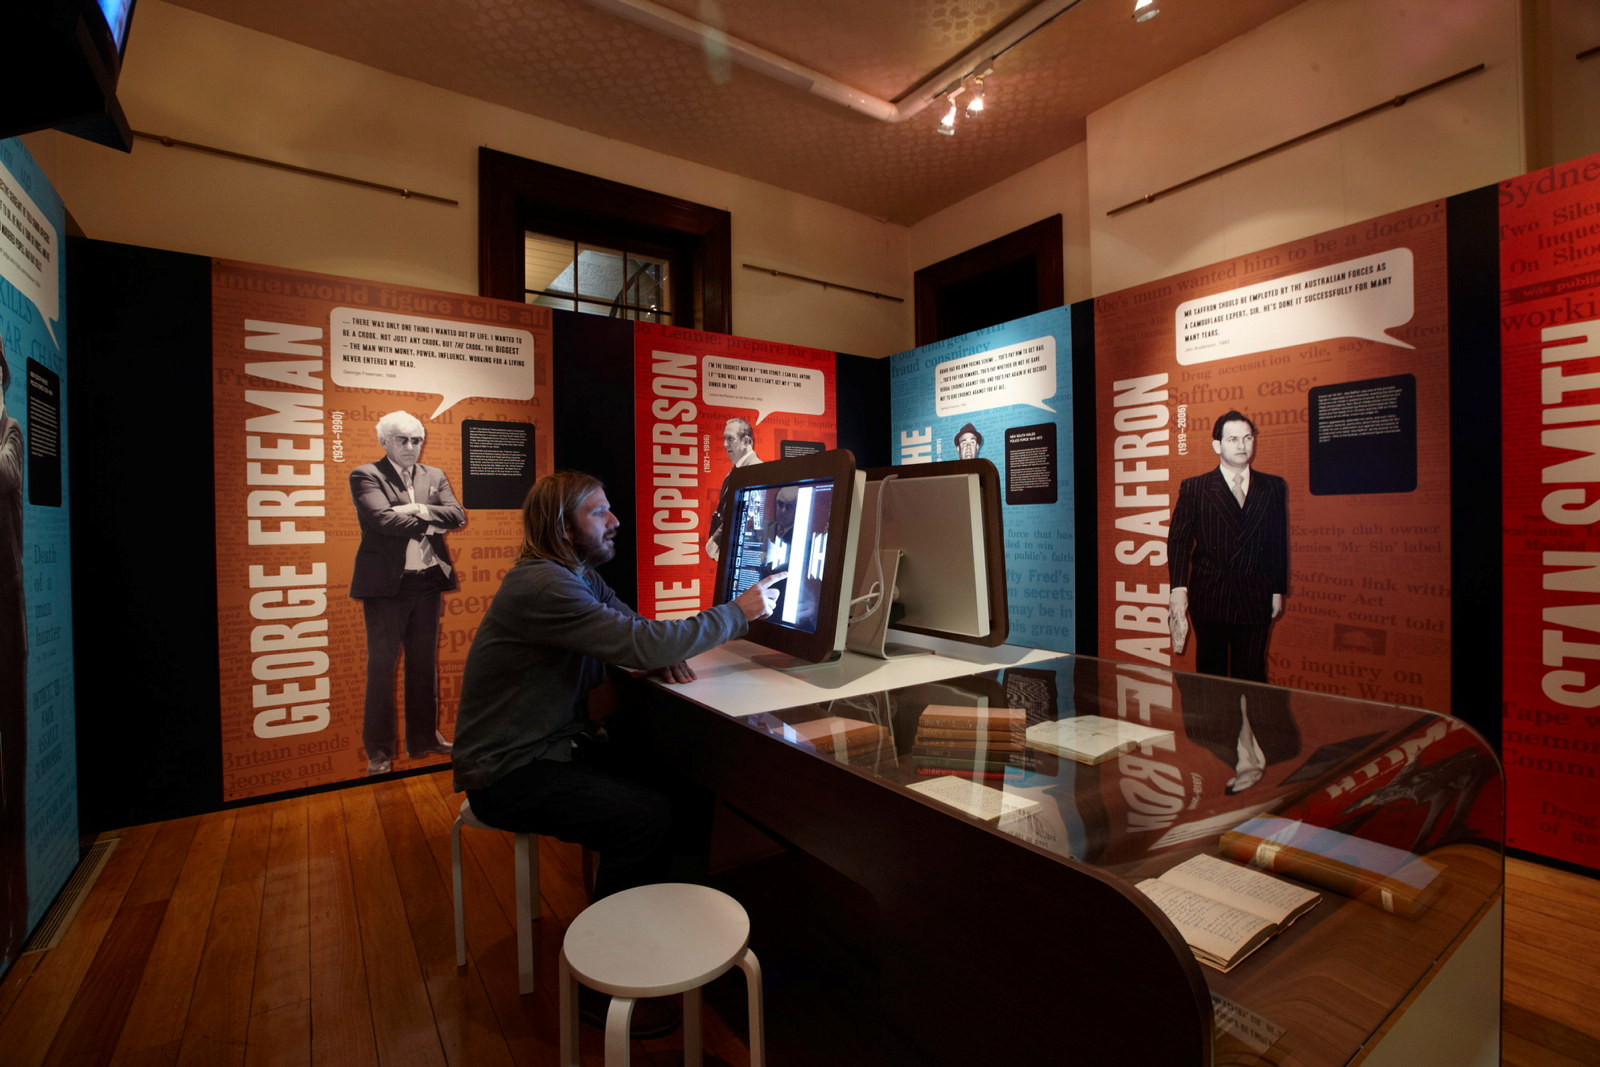 Sin City: crime & corruption in 20th-century Sydney exhibition installation view